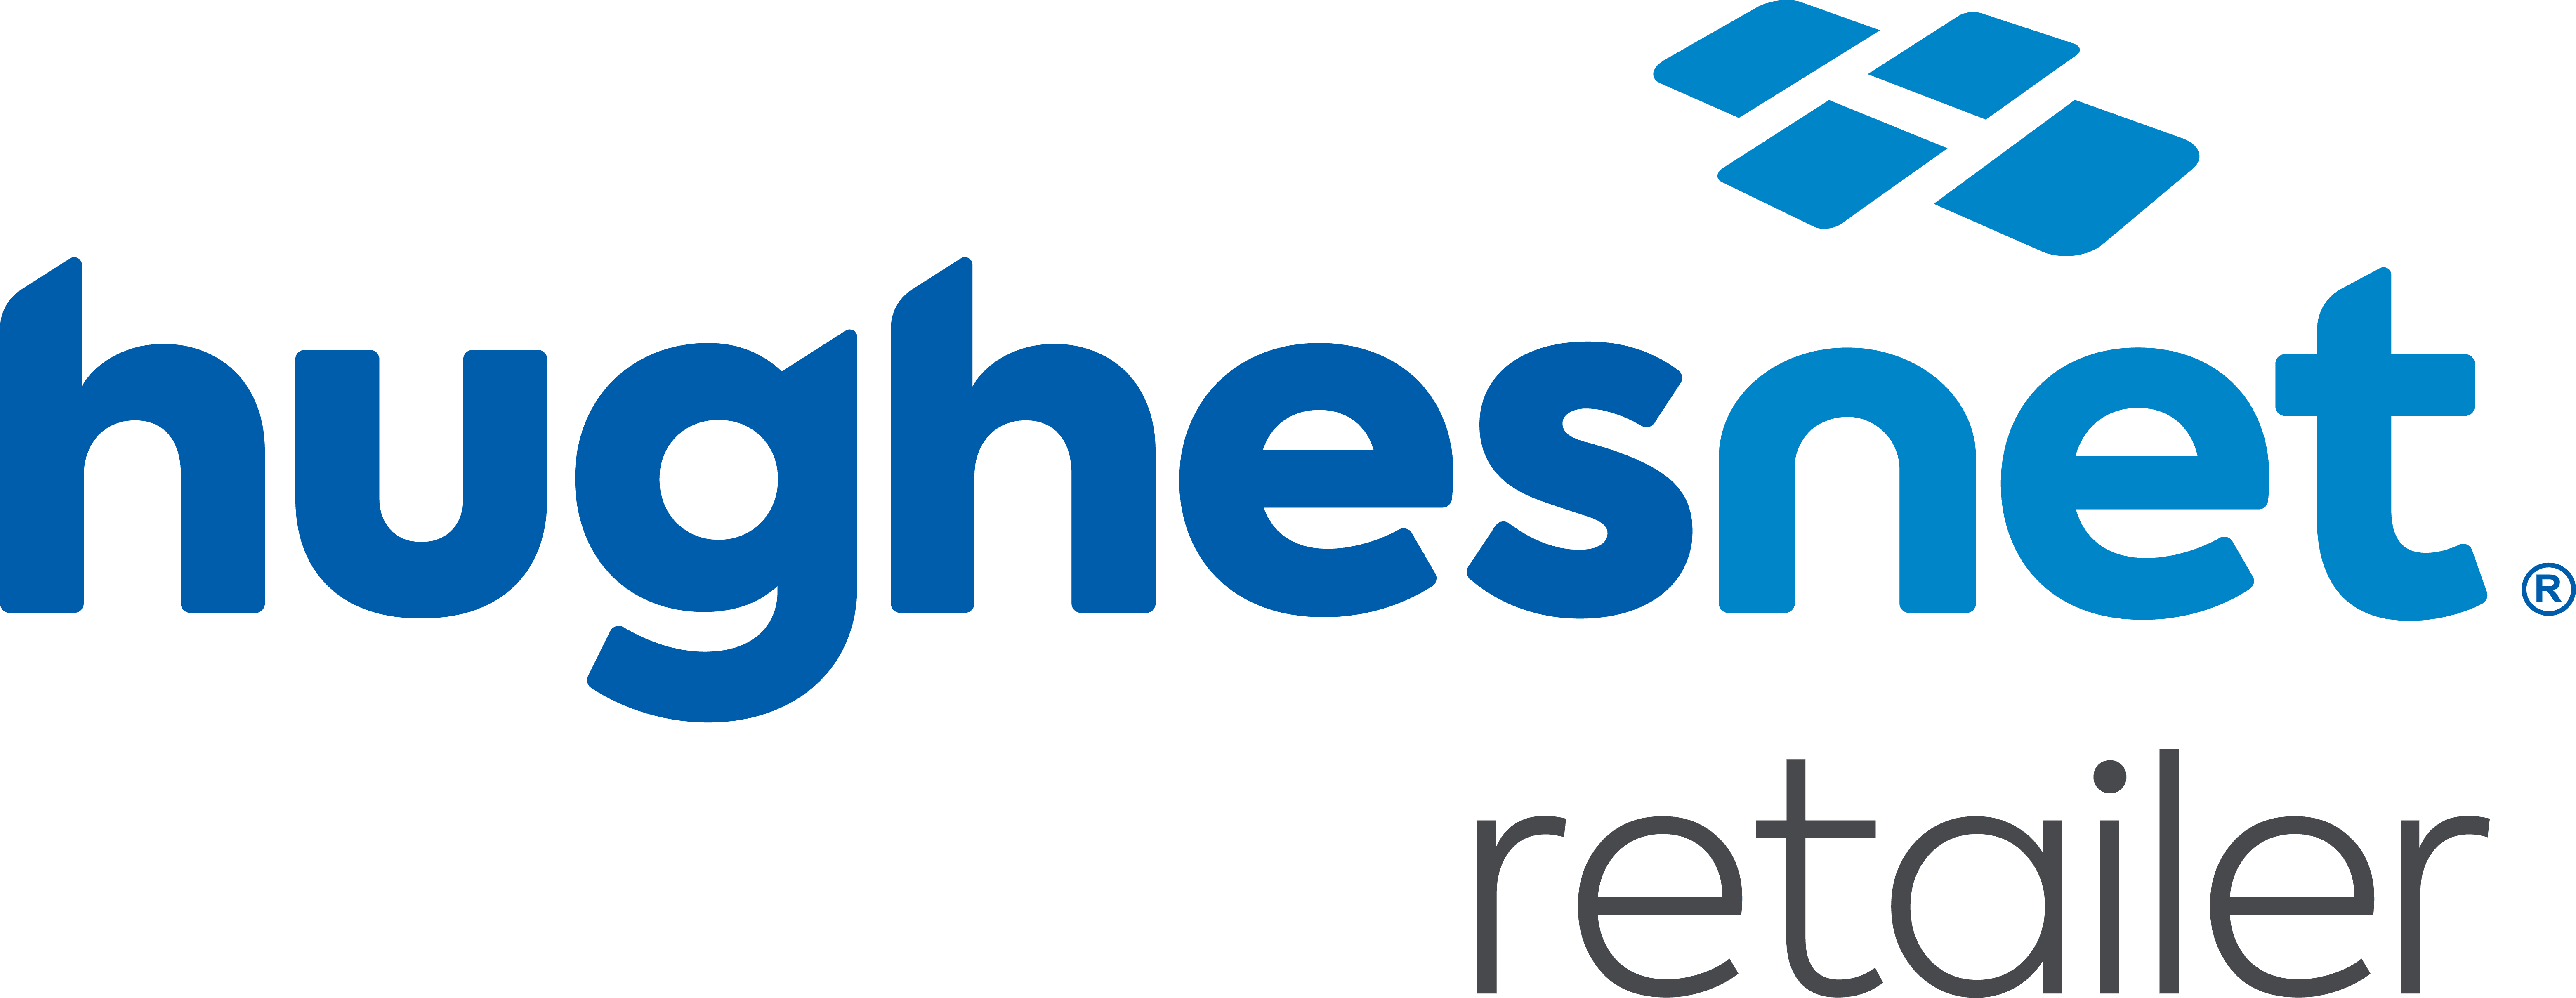 Hughesnet Logo Retailer Stack CMYK Primary